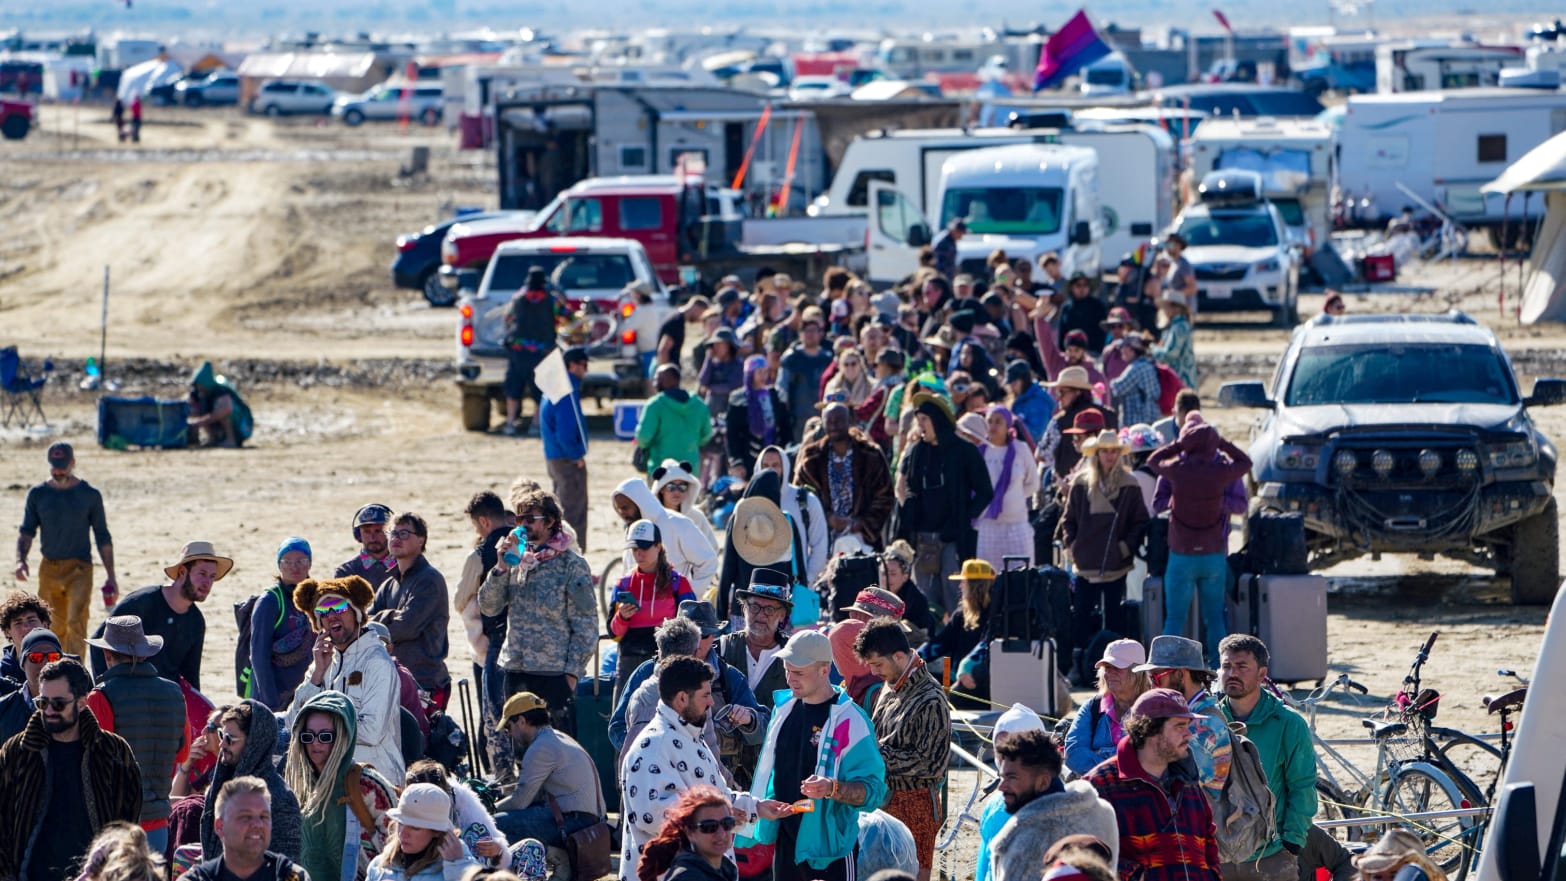 Burning Man Fatality Identified as 32YearOld Leon Reece, Police Say